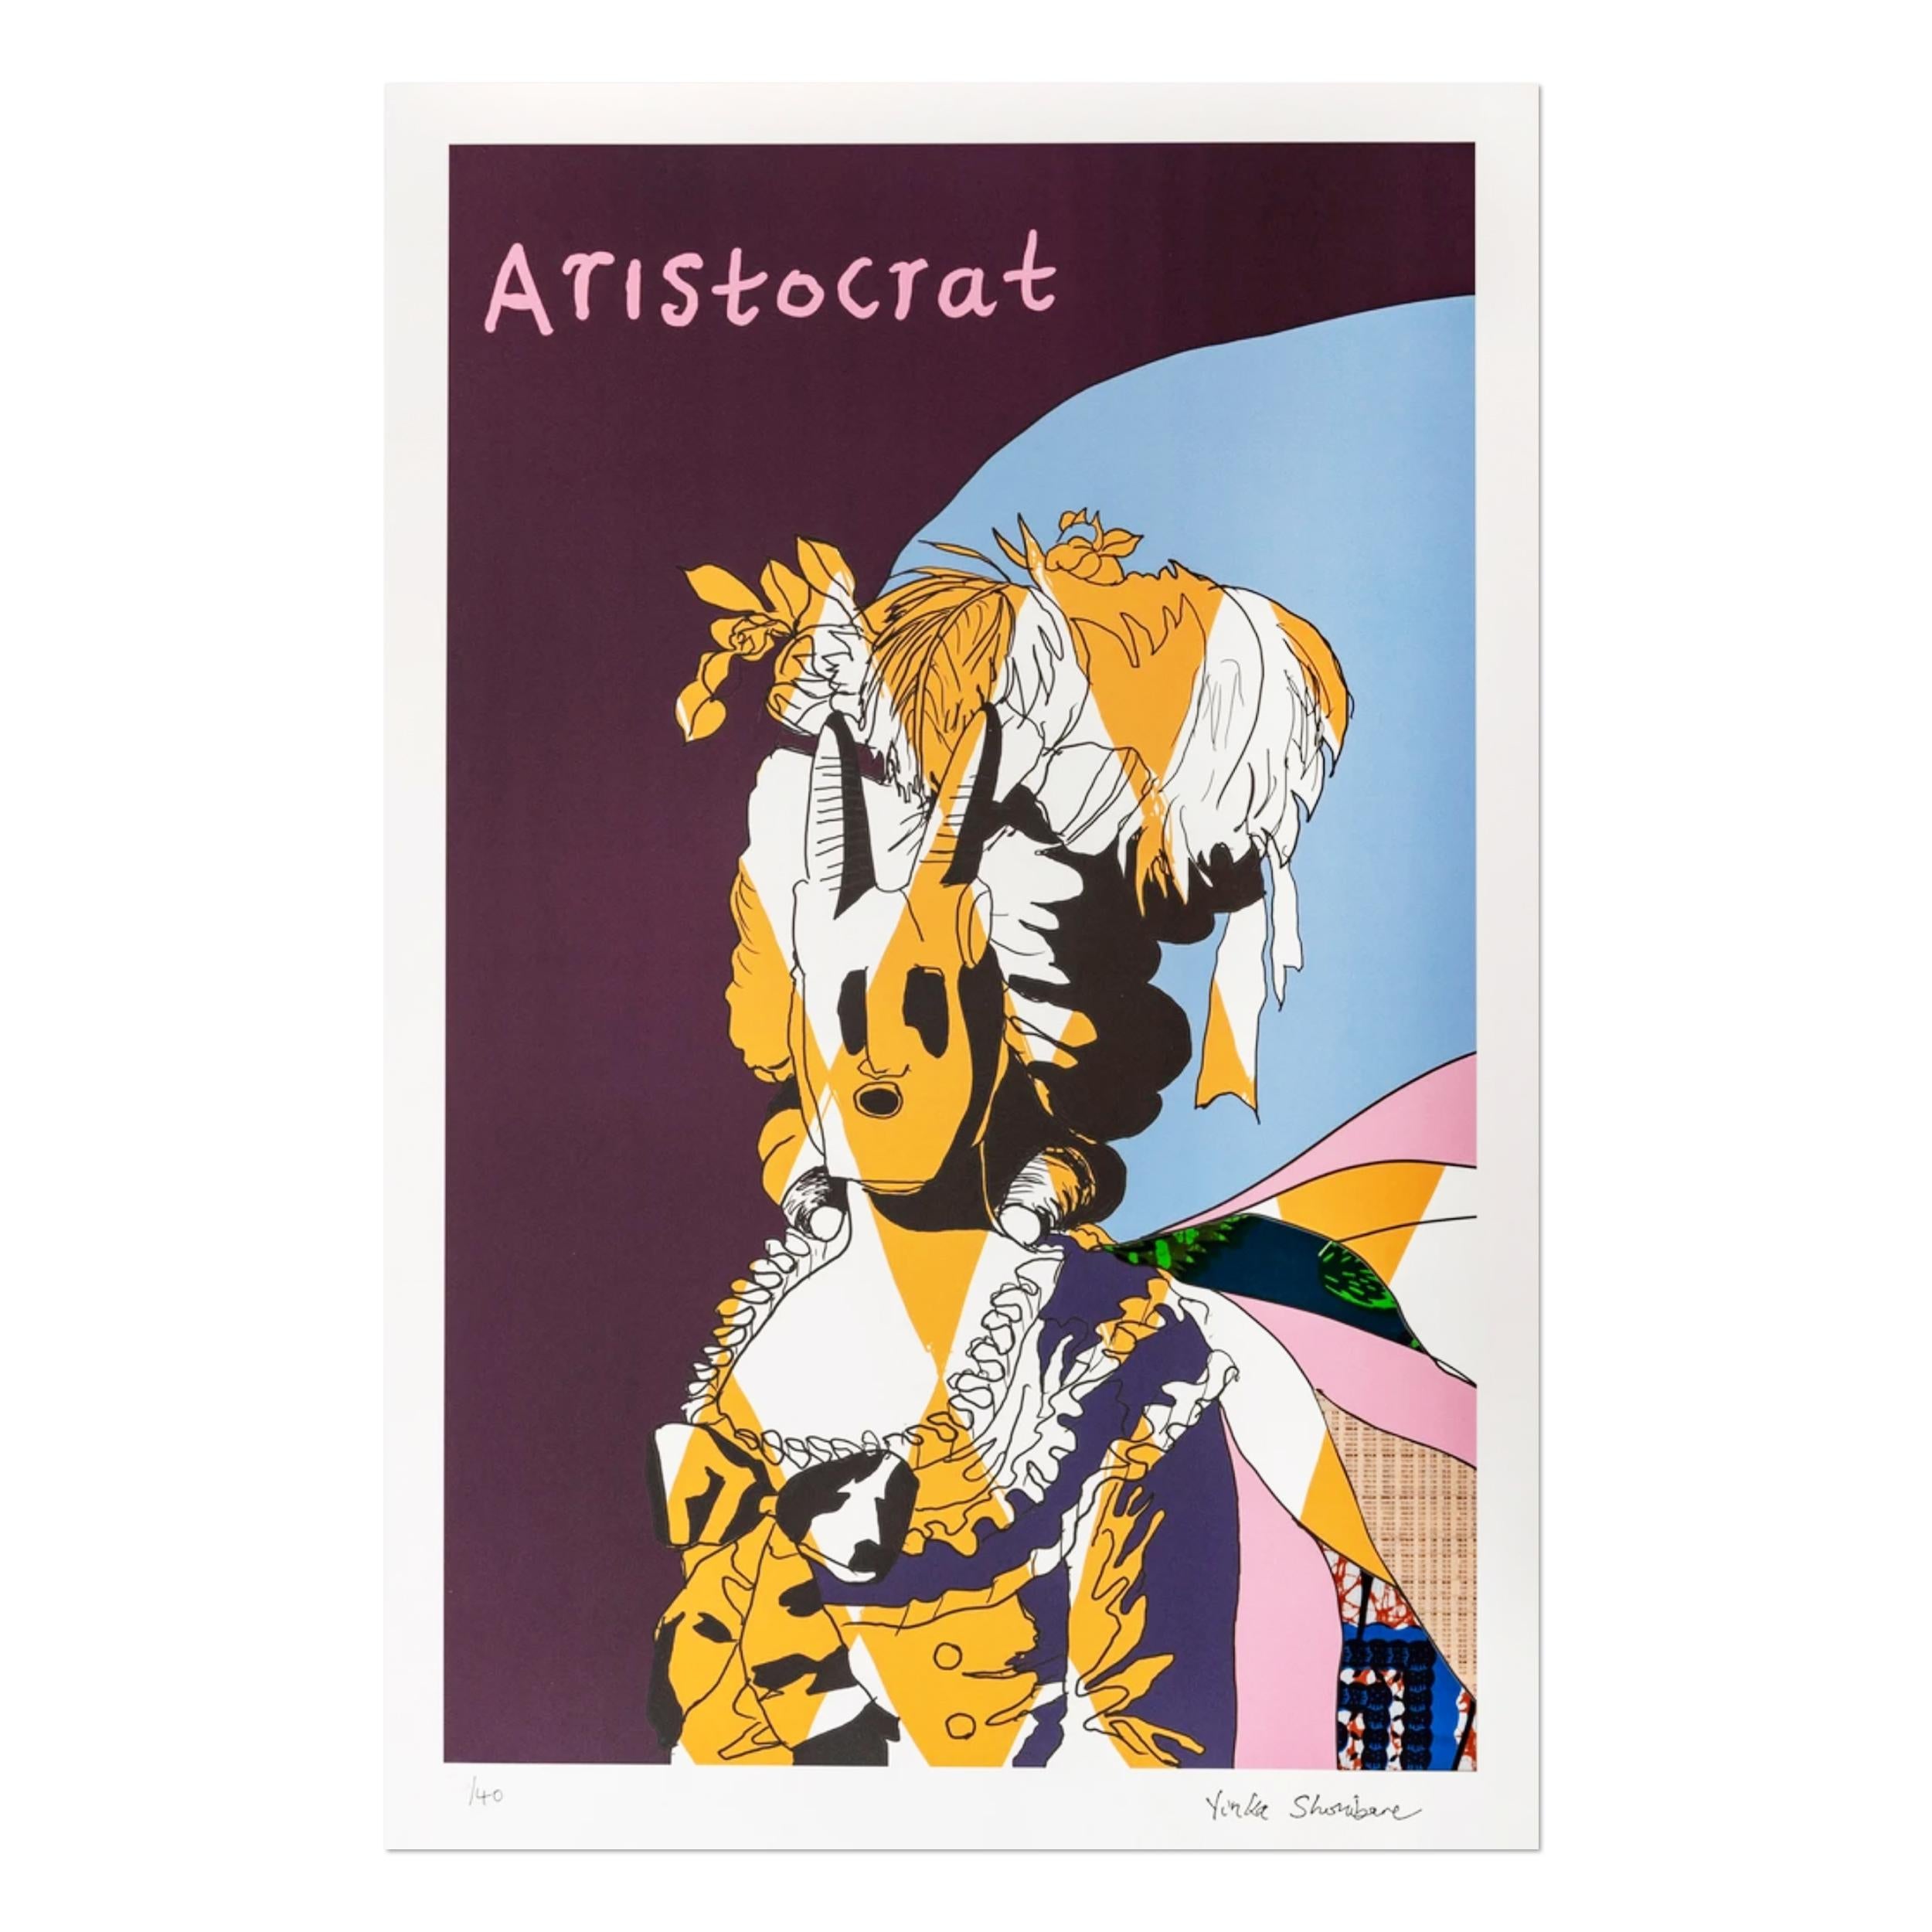 Yinka Shonibare Abstract Print - Aristocrat in Blue, Contemporary Art, British Artist